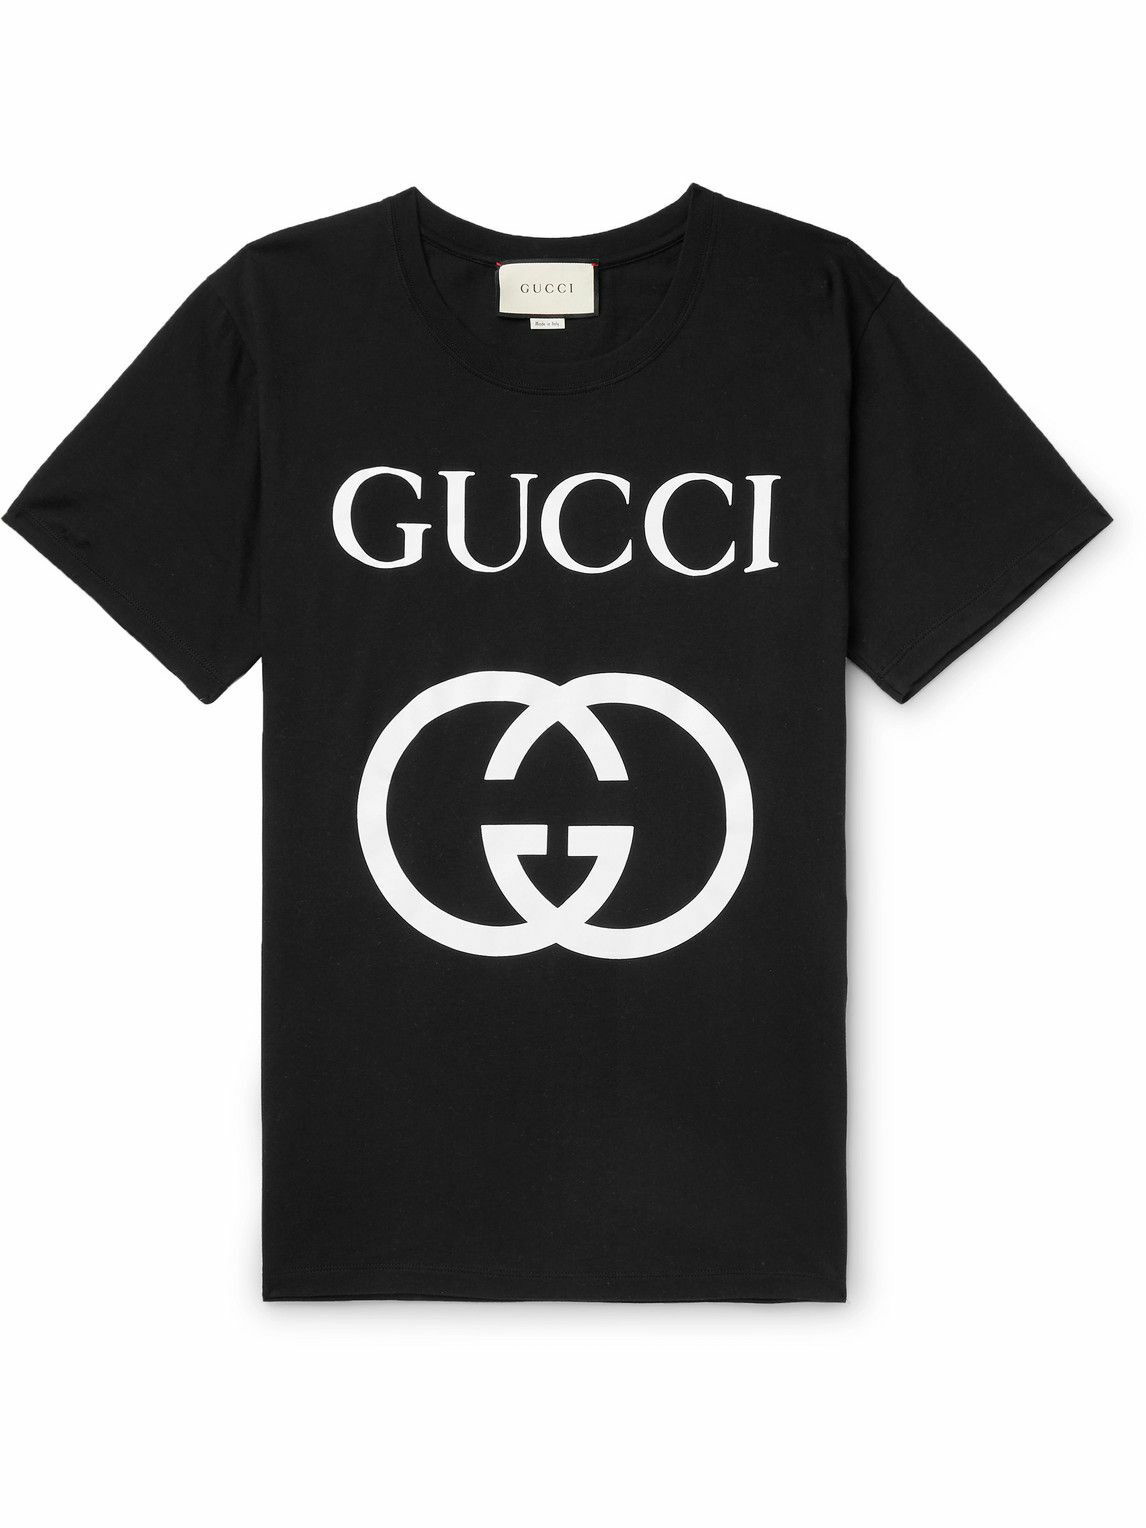 GUCCI - Logo-Print Cotton-Jersey T-Shirt - Black Gucci